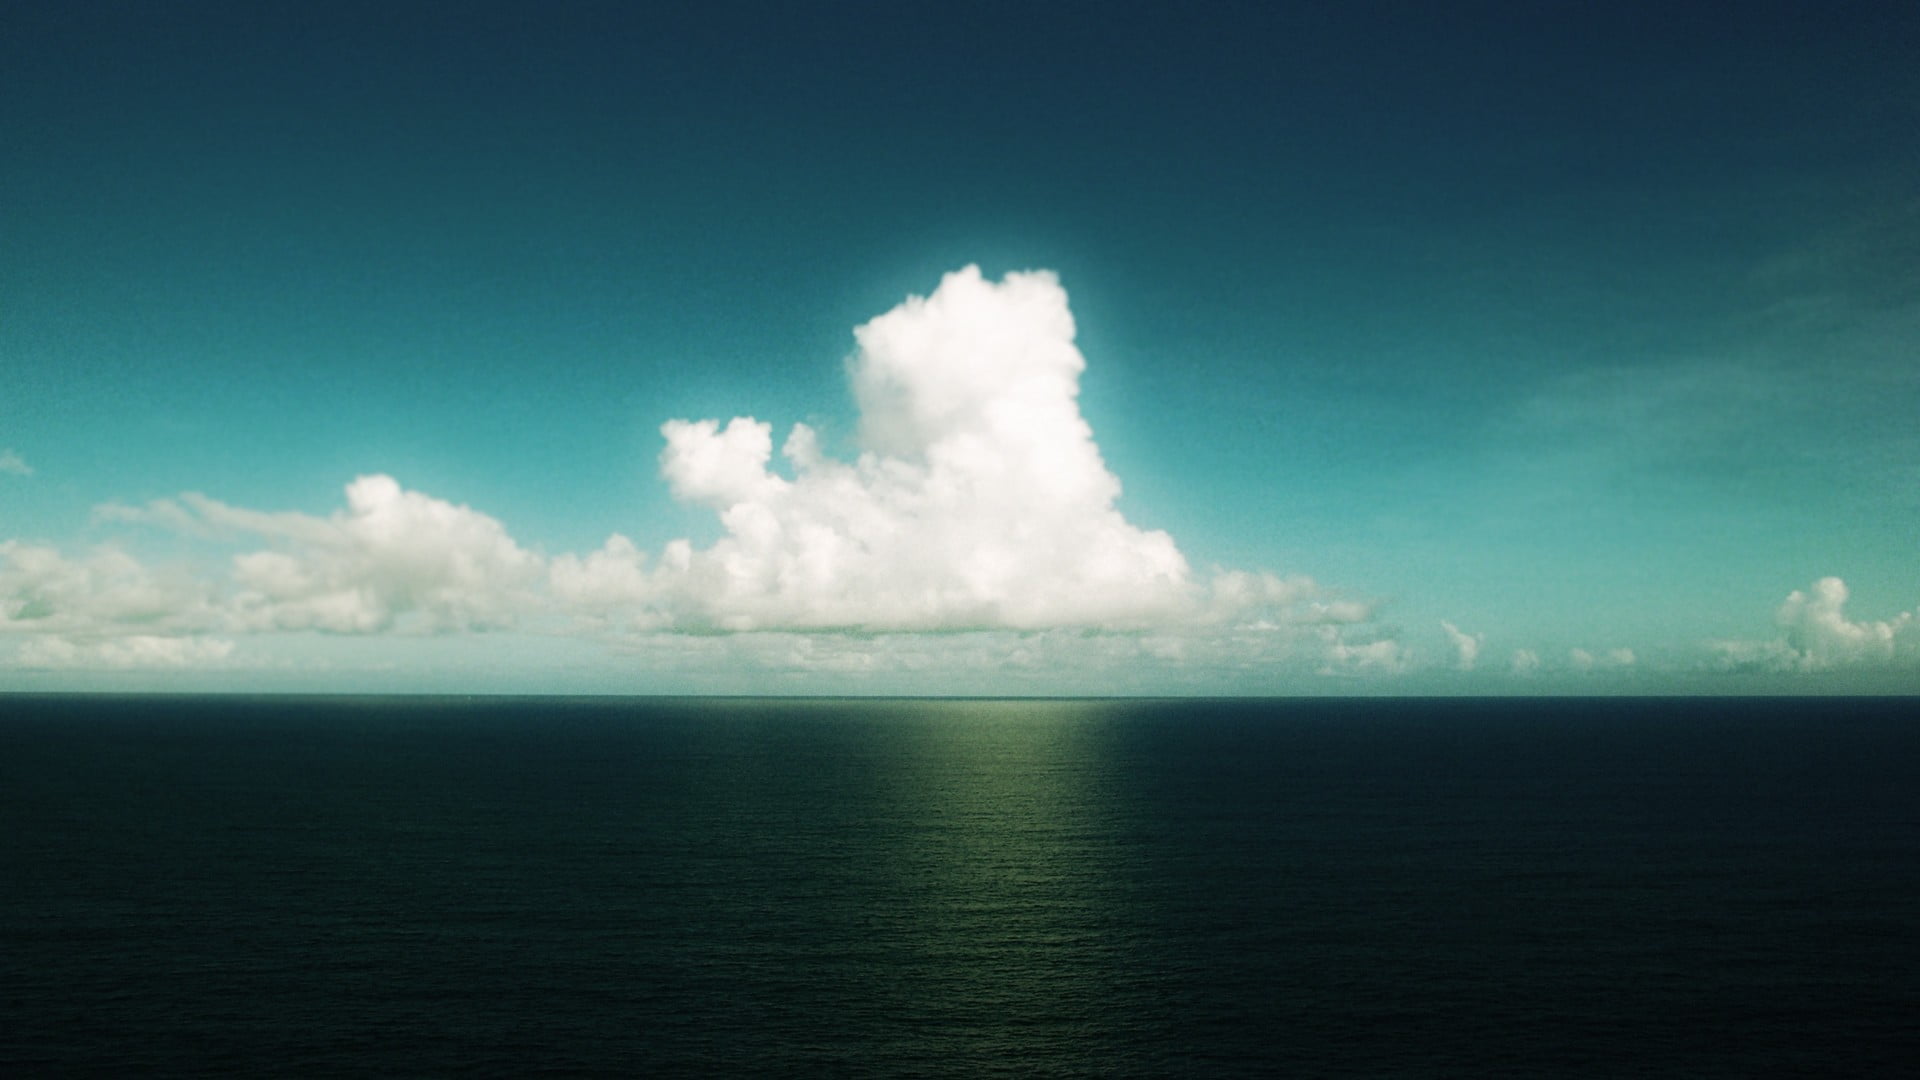 landscape photography of ocean